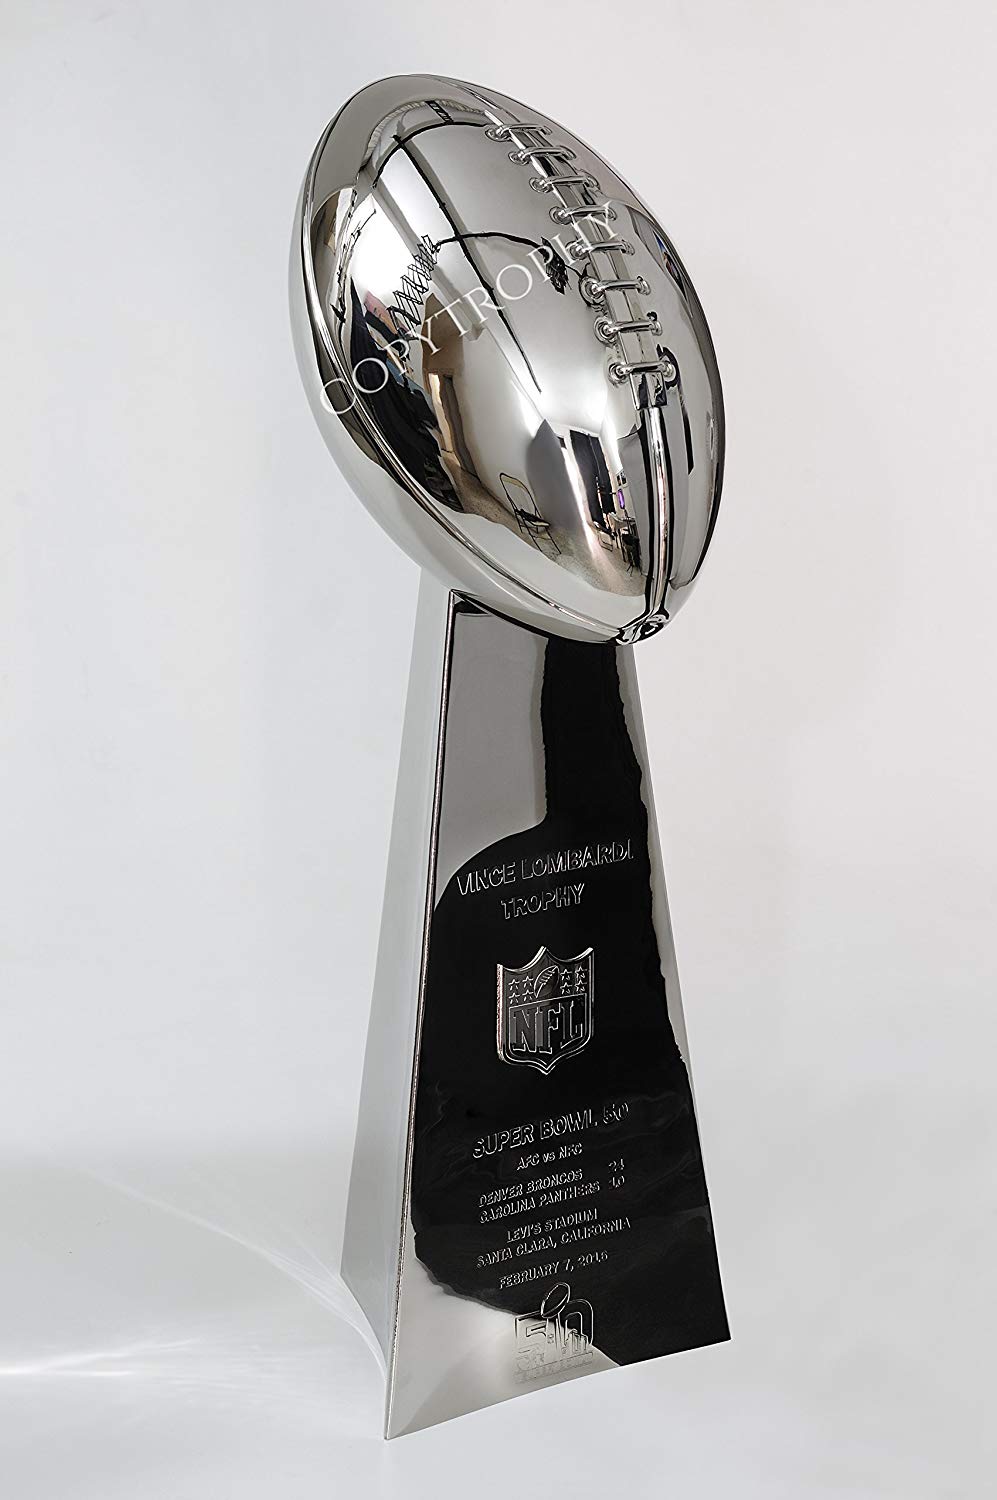 Replica Super Bowl Trophy. Replica Vince Lombardi Trophy.: Amazon.co